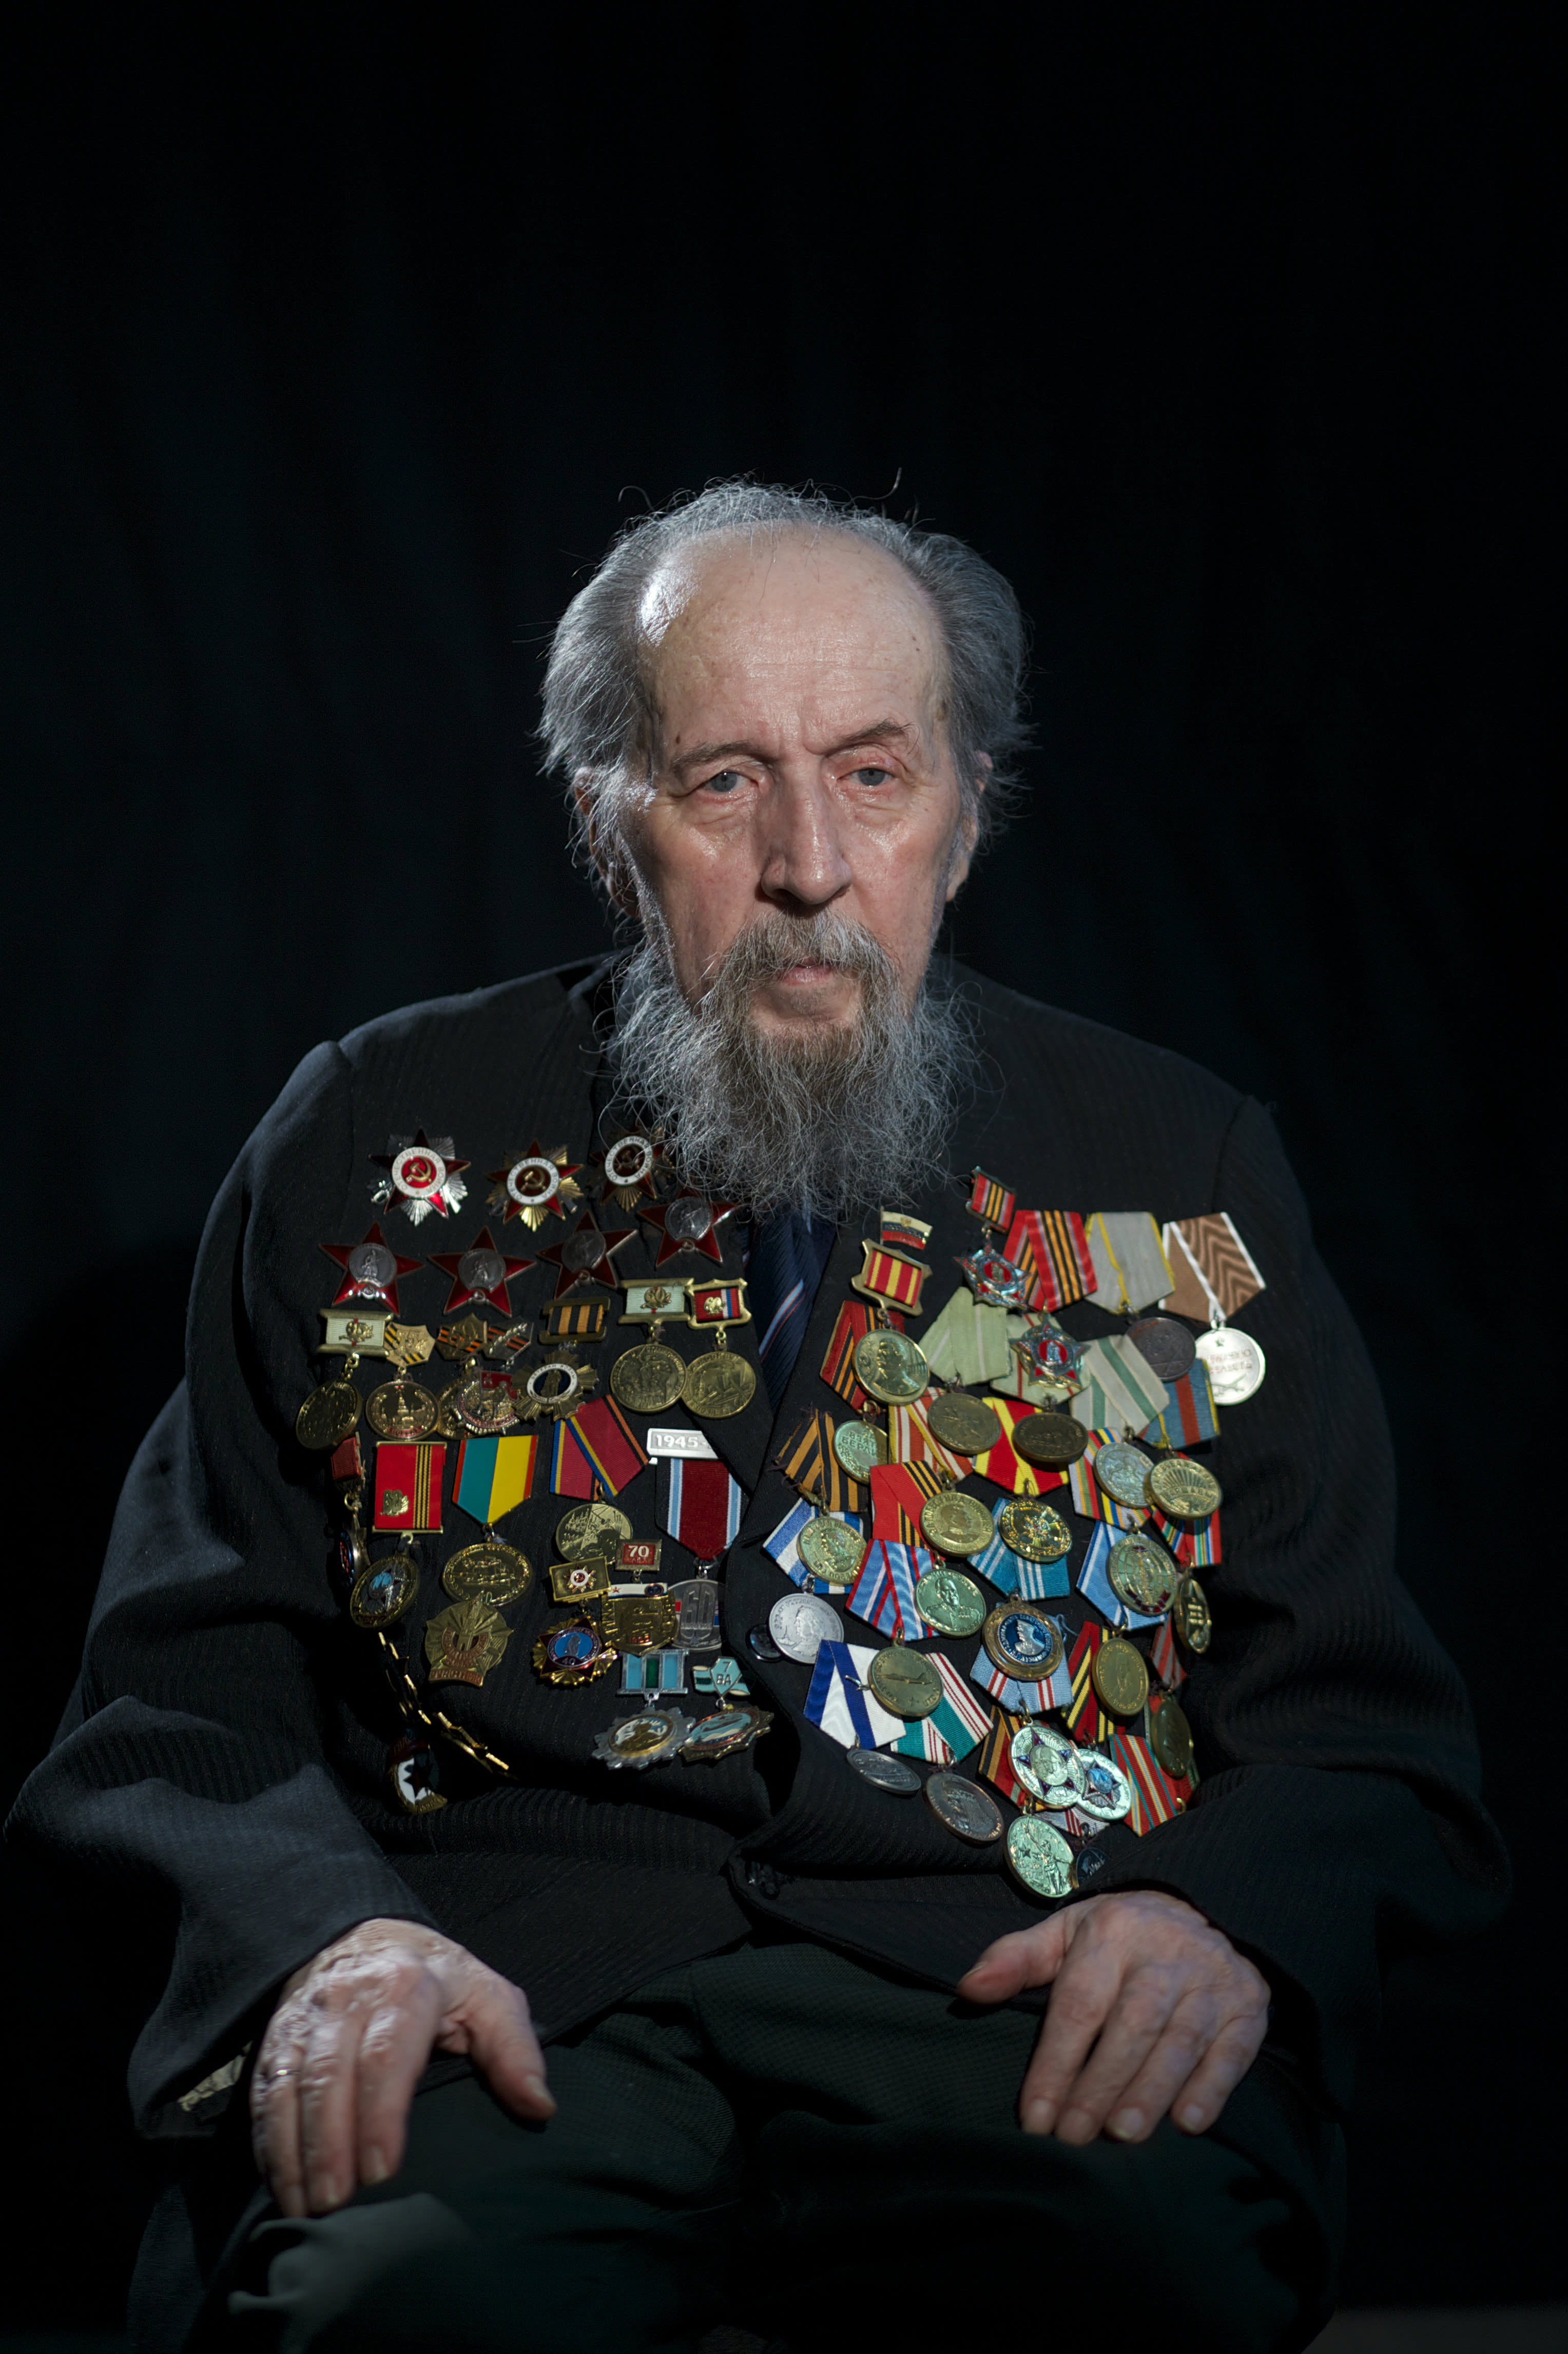 Russian WWII vet recalls the Battle of Stalingrad